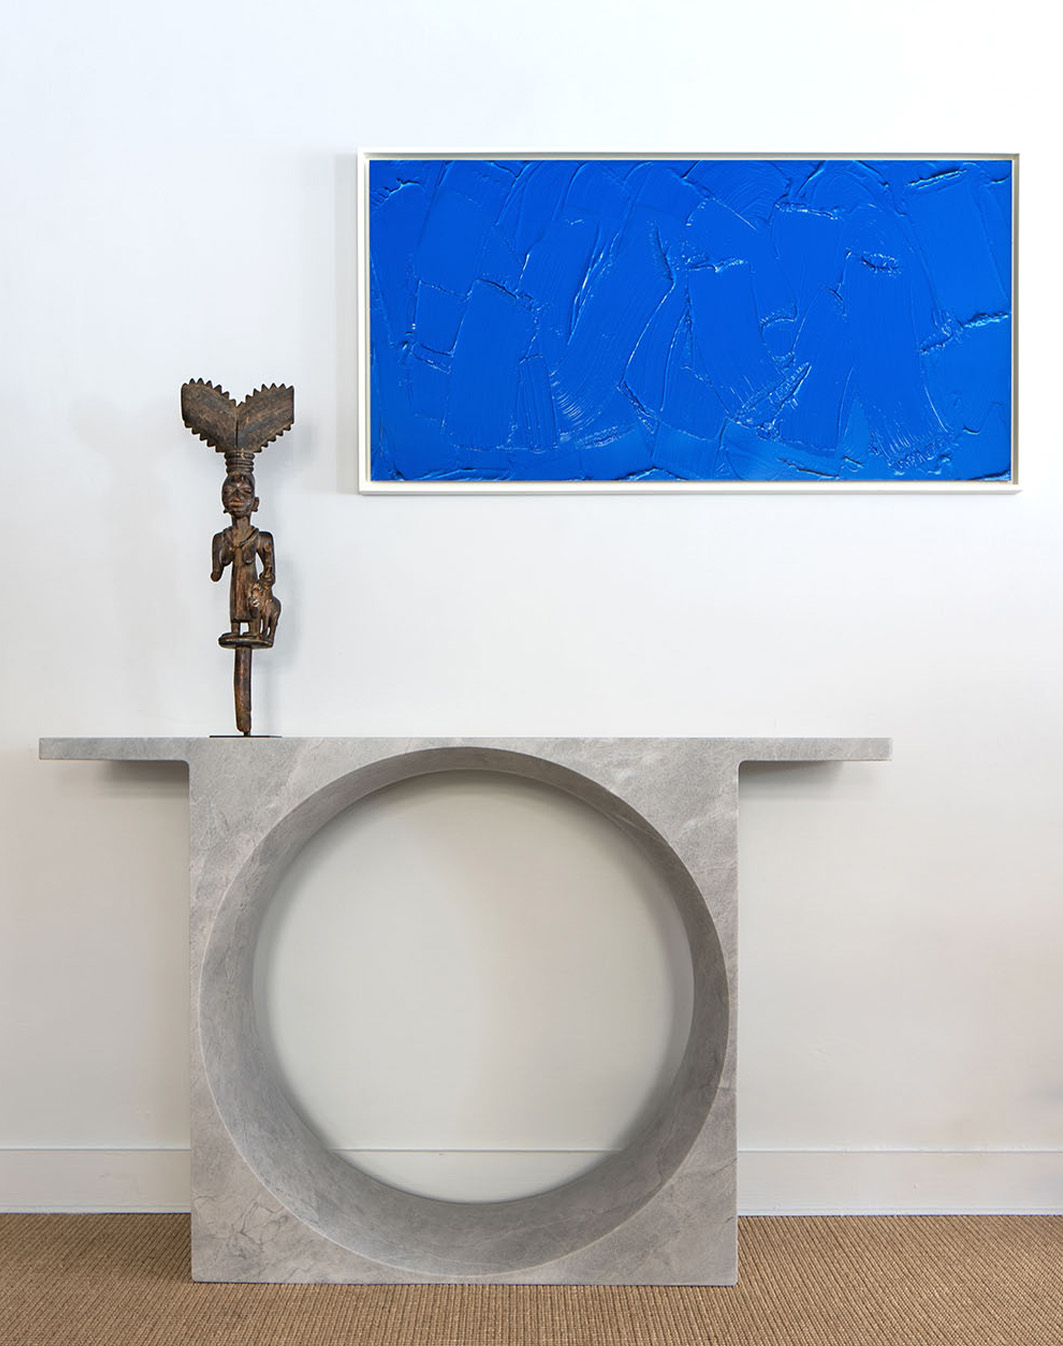 Pierre Charpin - Lucas Ratton x kamel mennour x Galerie kreo in Saint-Tropez